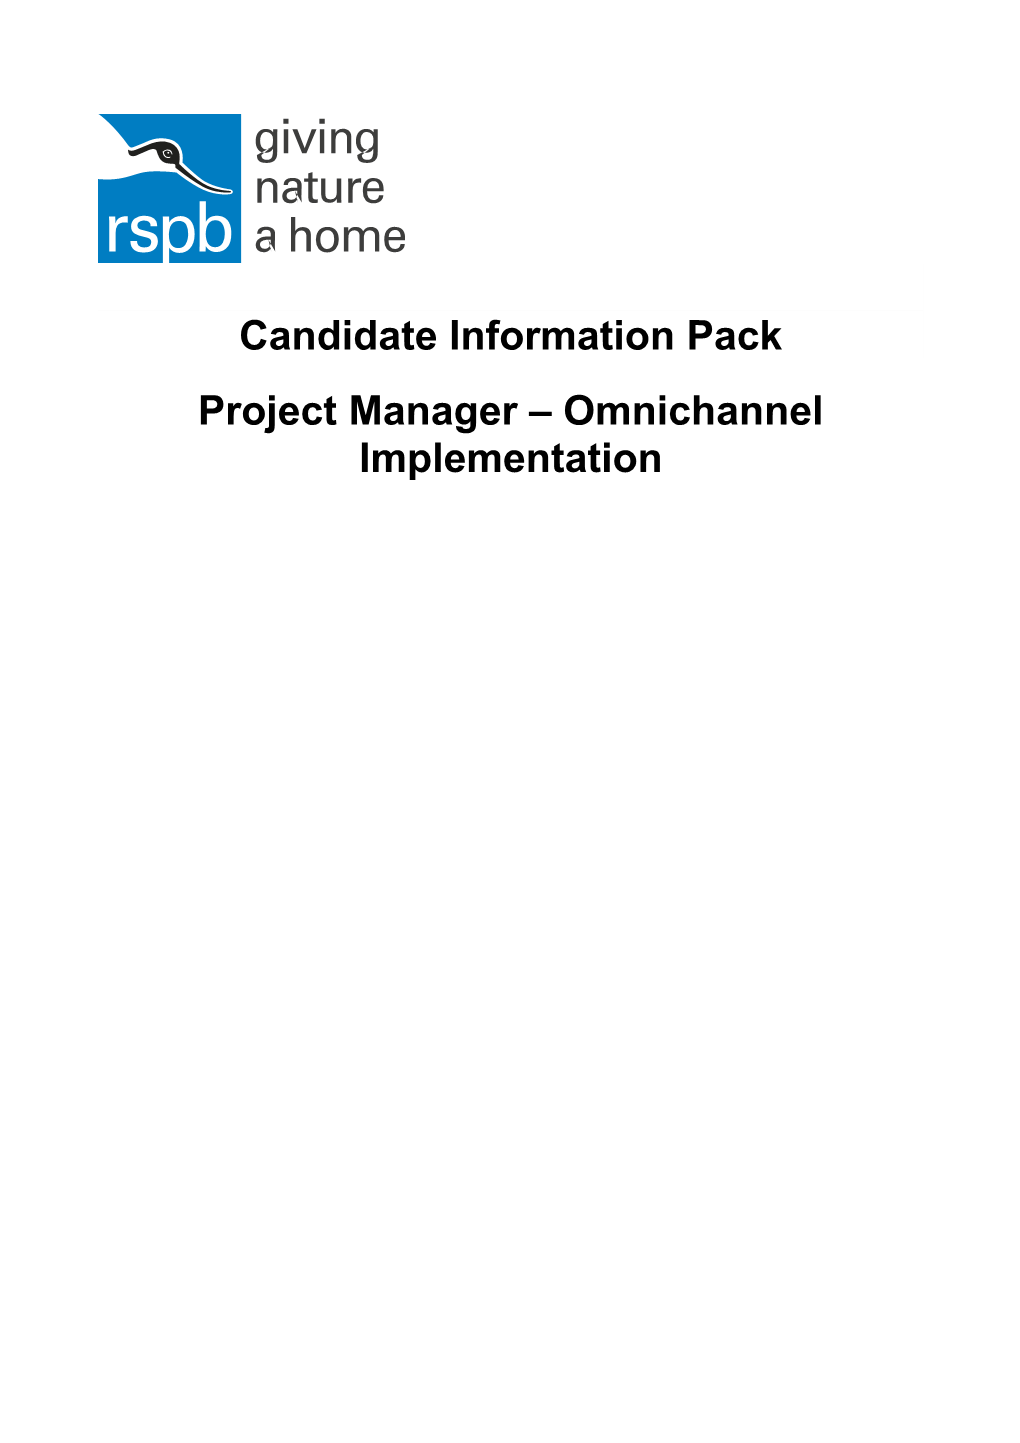 Project Manager Omnichannel Implementation